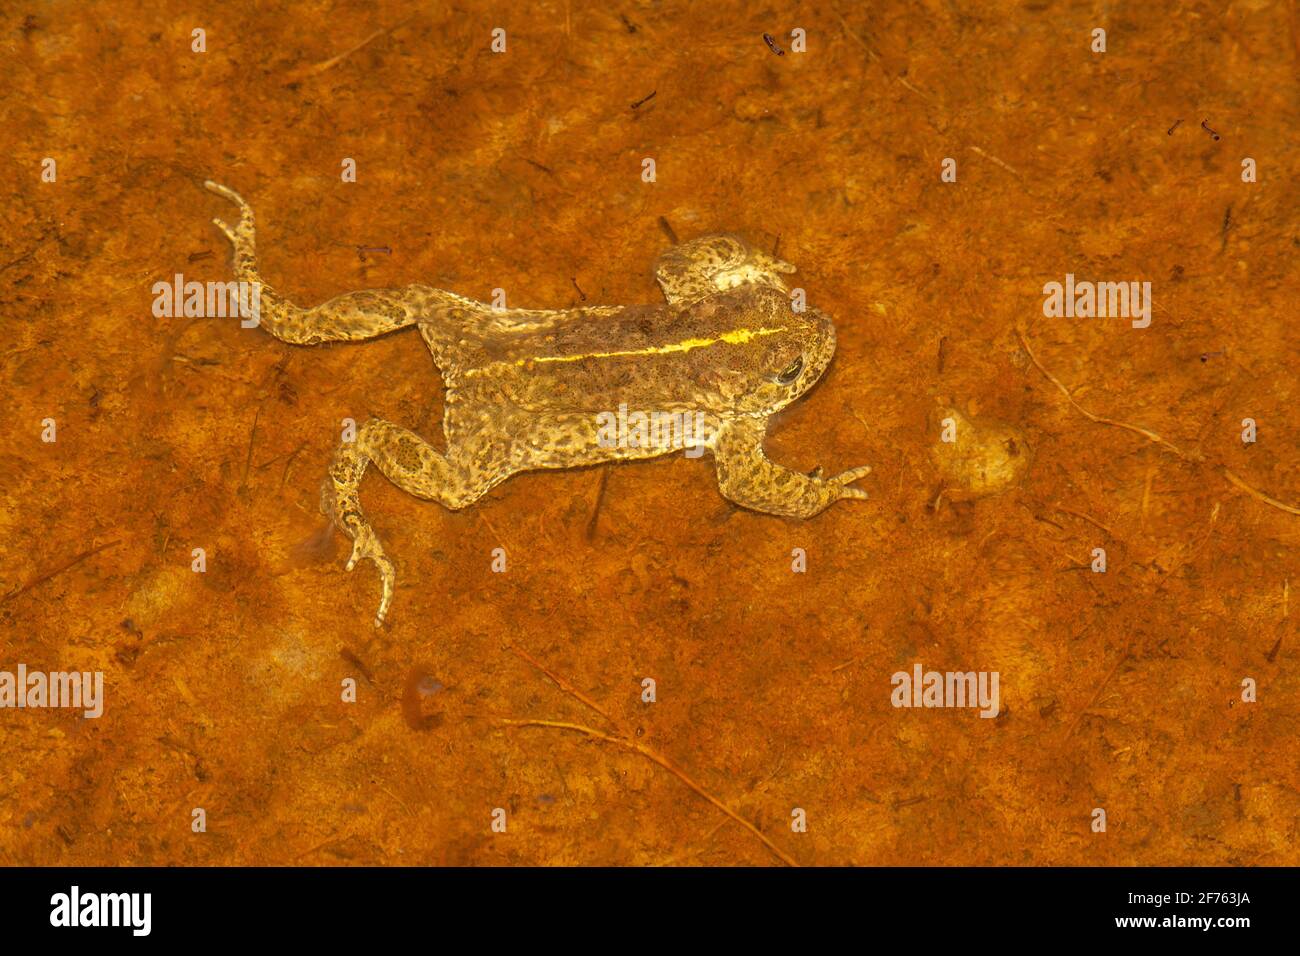 Natterjack toad (Epidalea calamita), Dunnerholme nature reserve, Cumbria Stock Photo